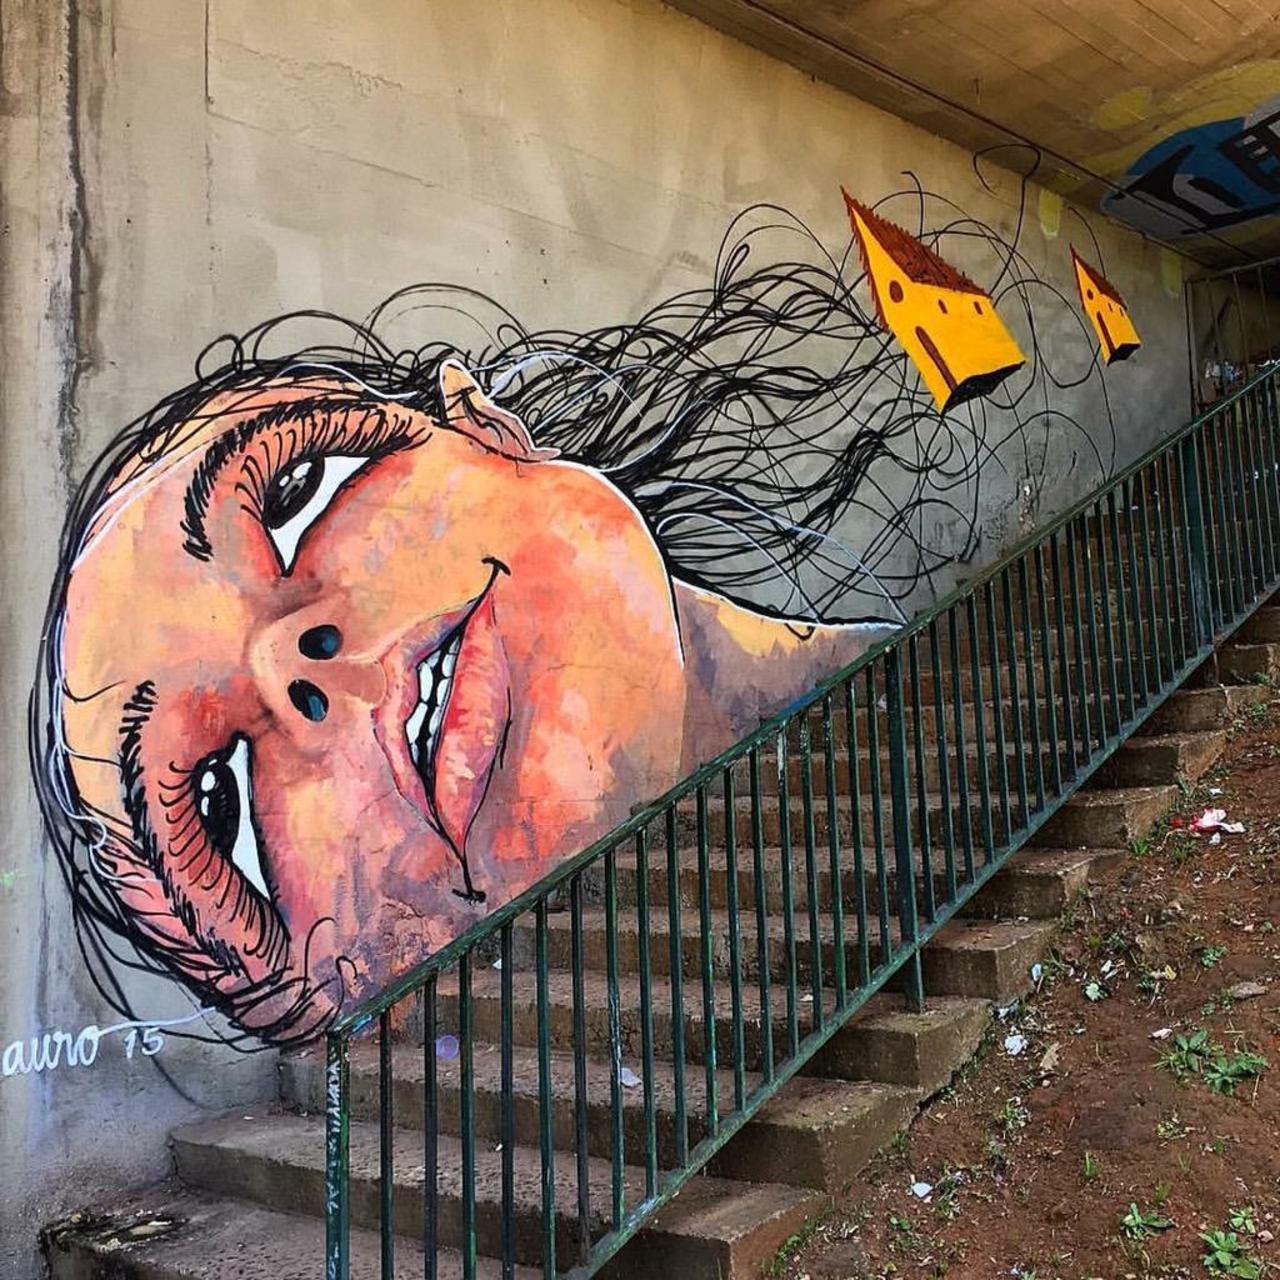 Street Art by Reveracidade in São Paulo 

#art #graffiti #mural #streetart http://t.co/13woCWKA8a